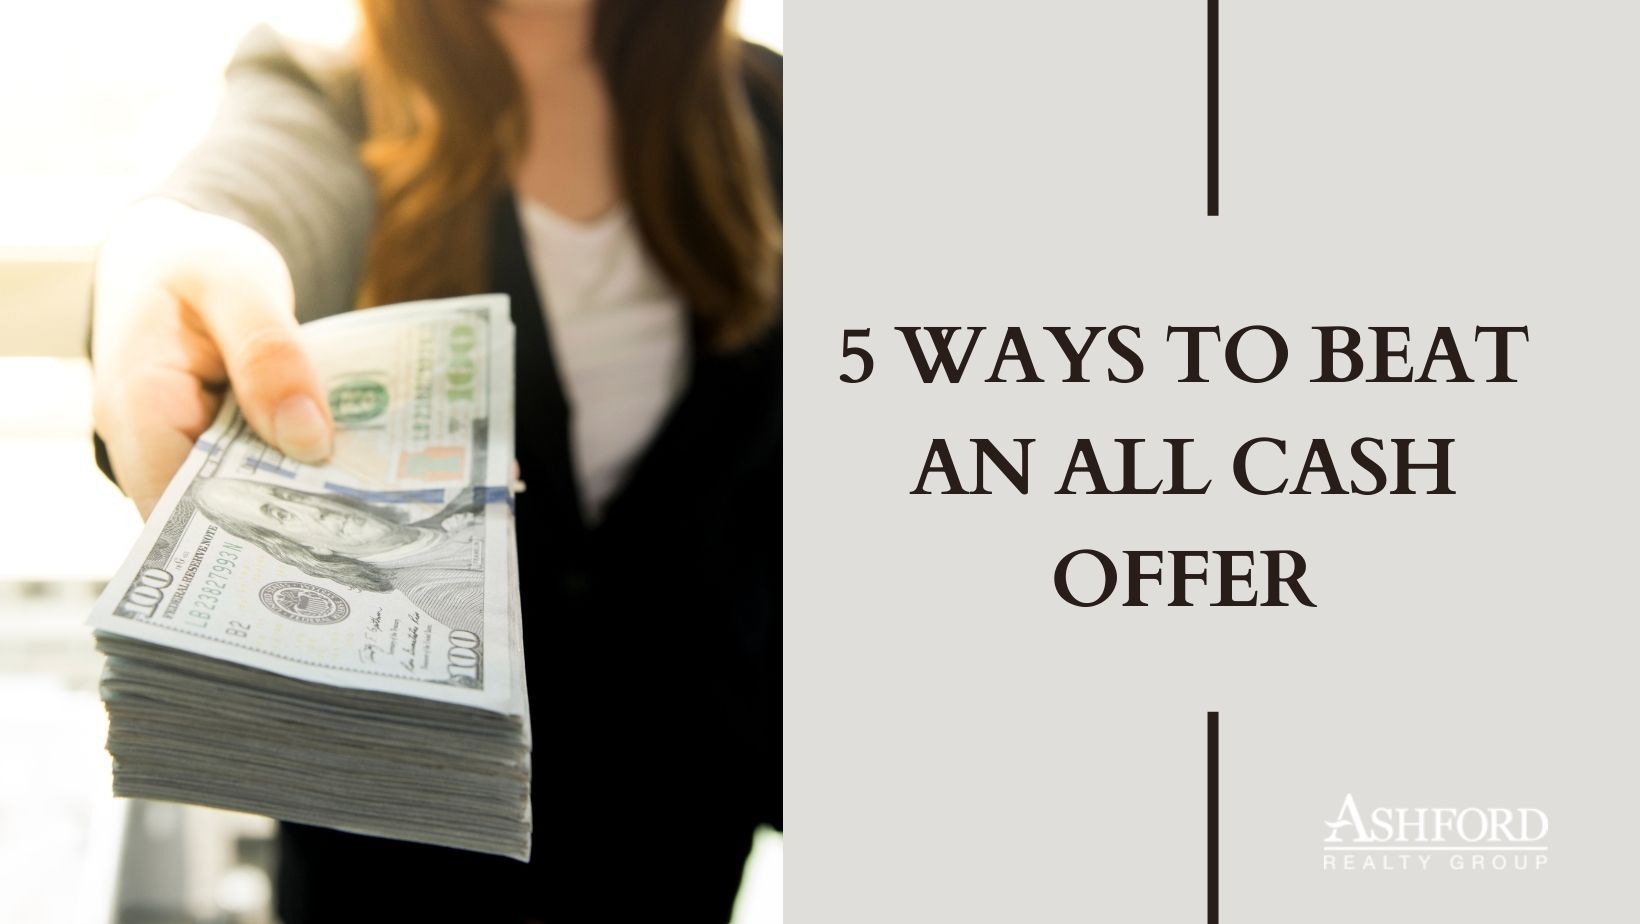 5 Ways to Beat an All Cash Offer